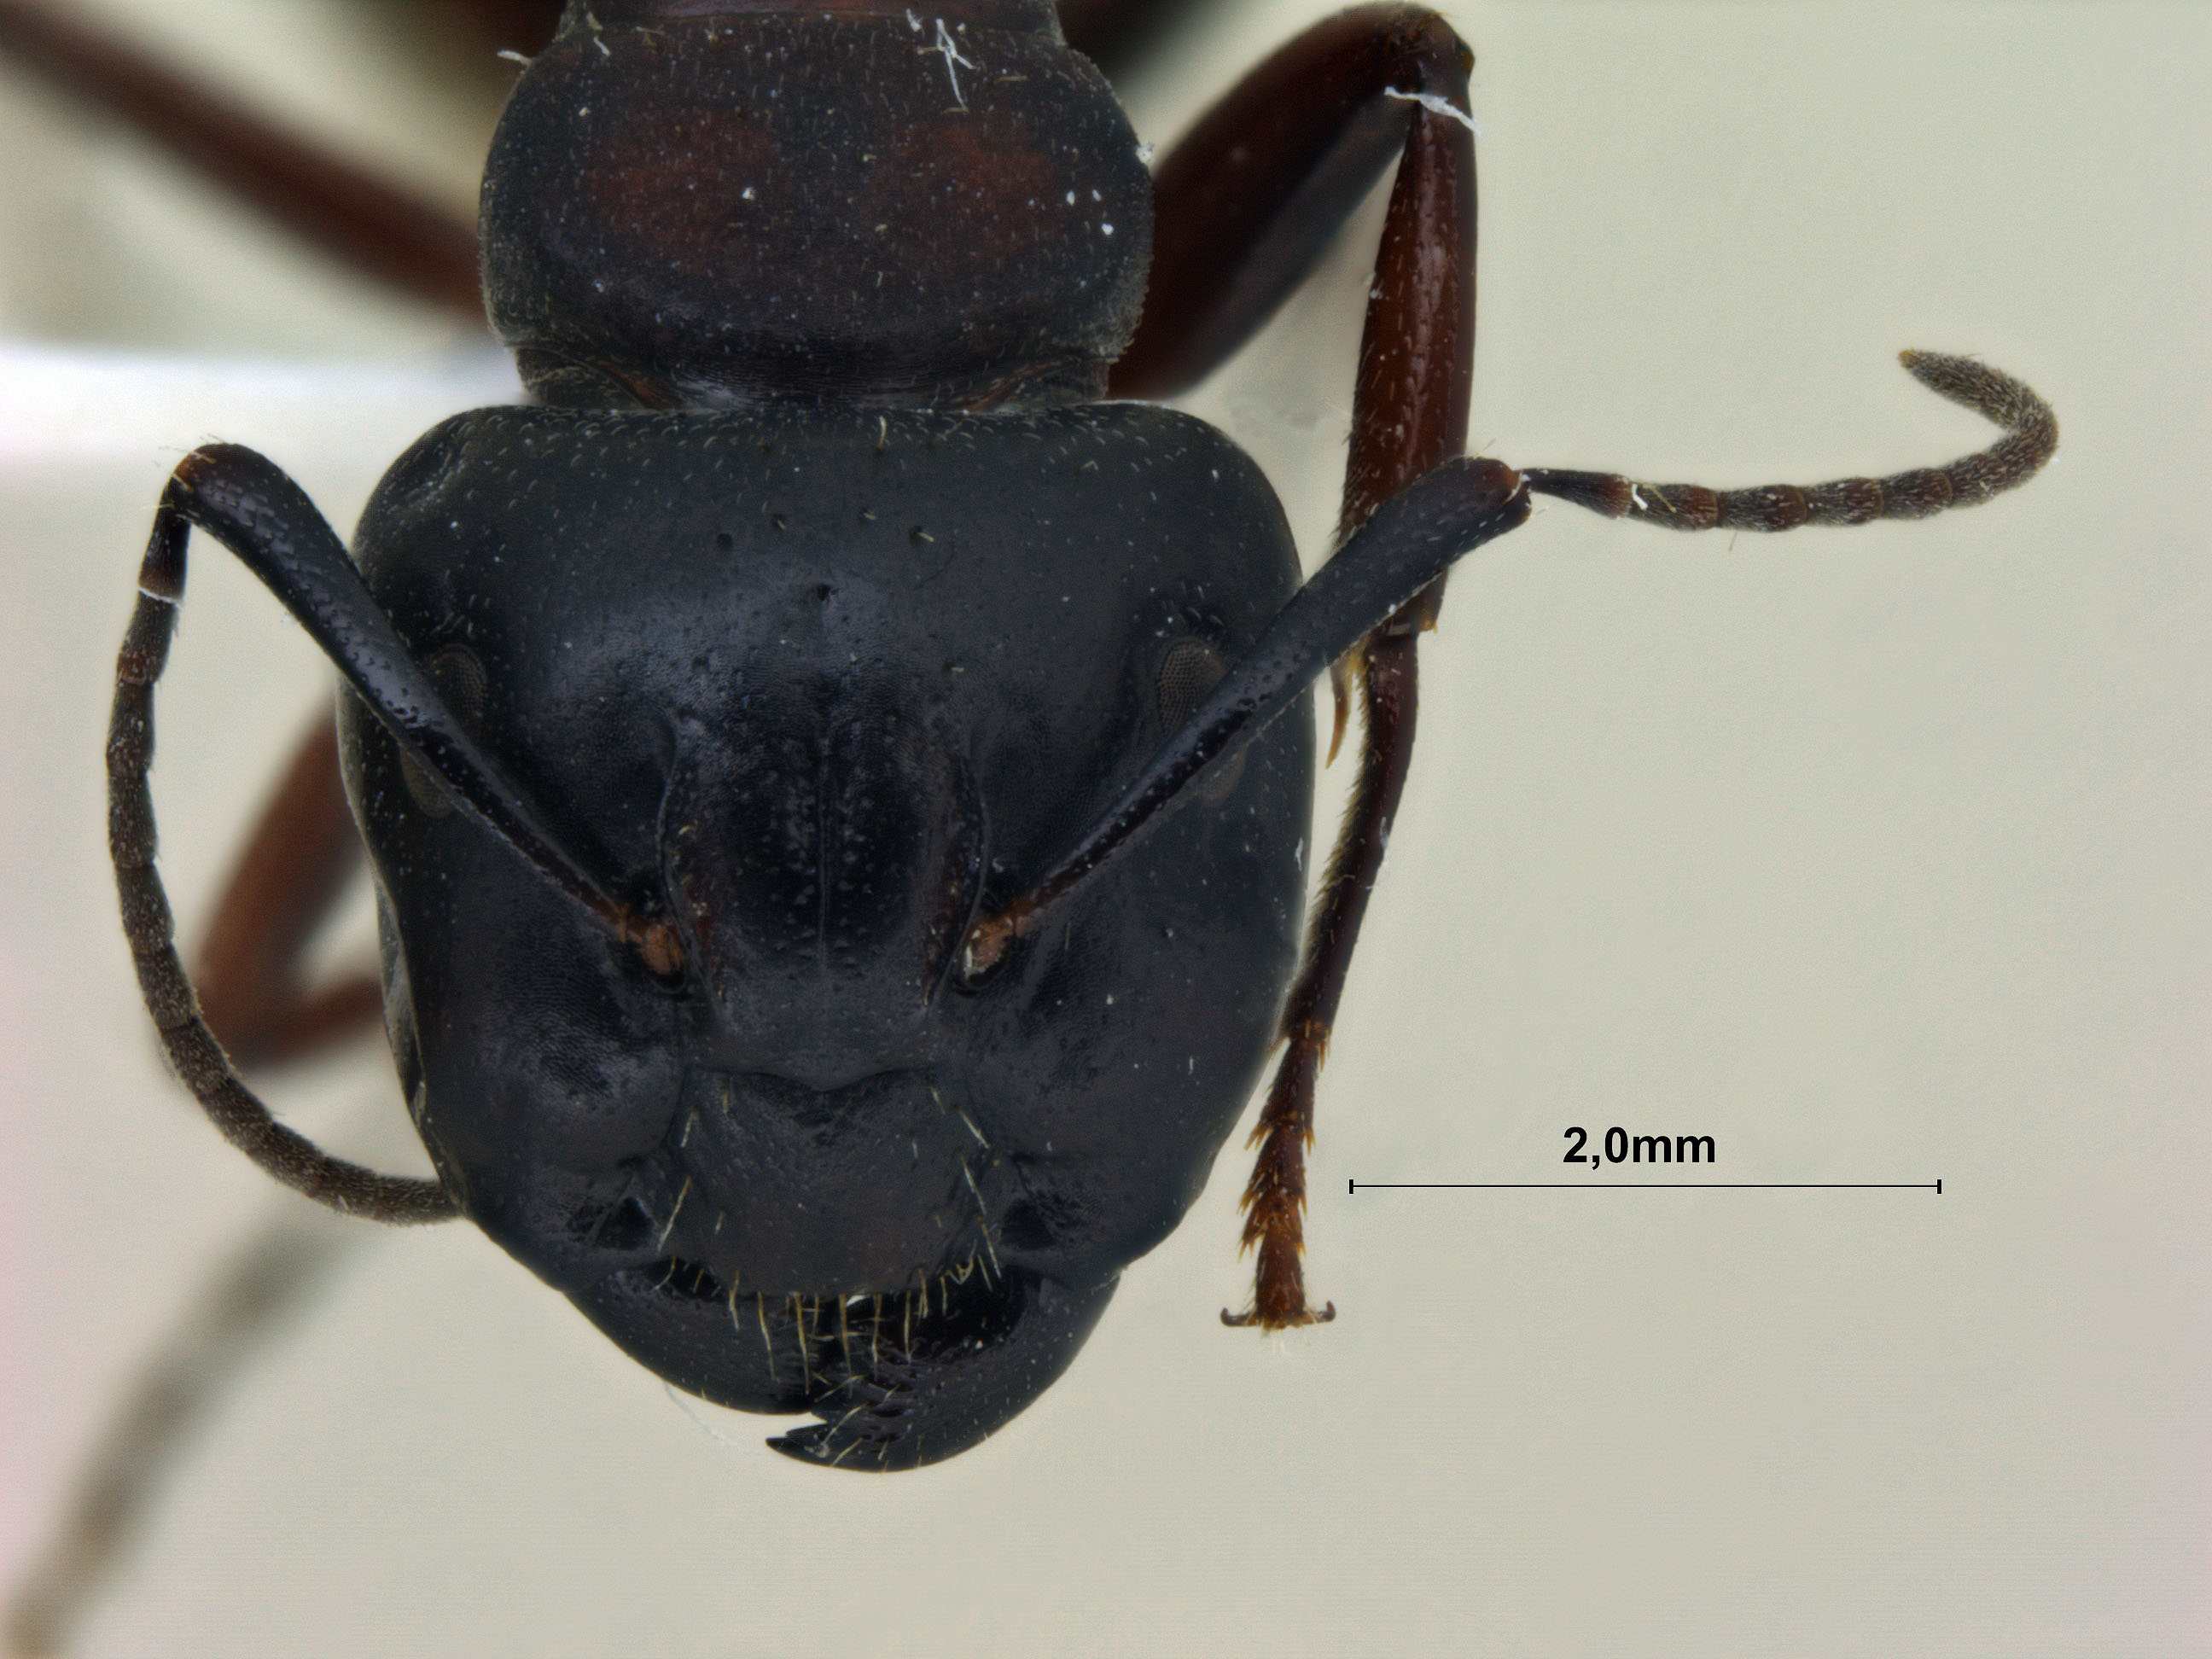 Camponotus sachalinensis frontal